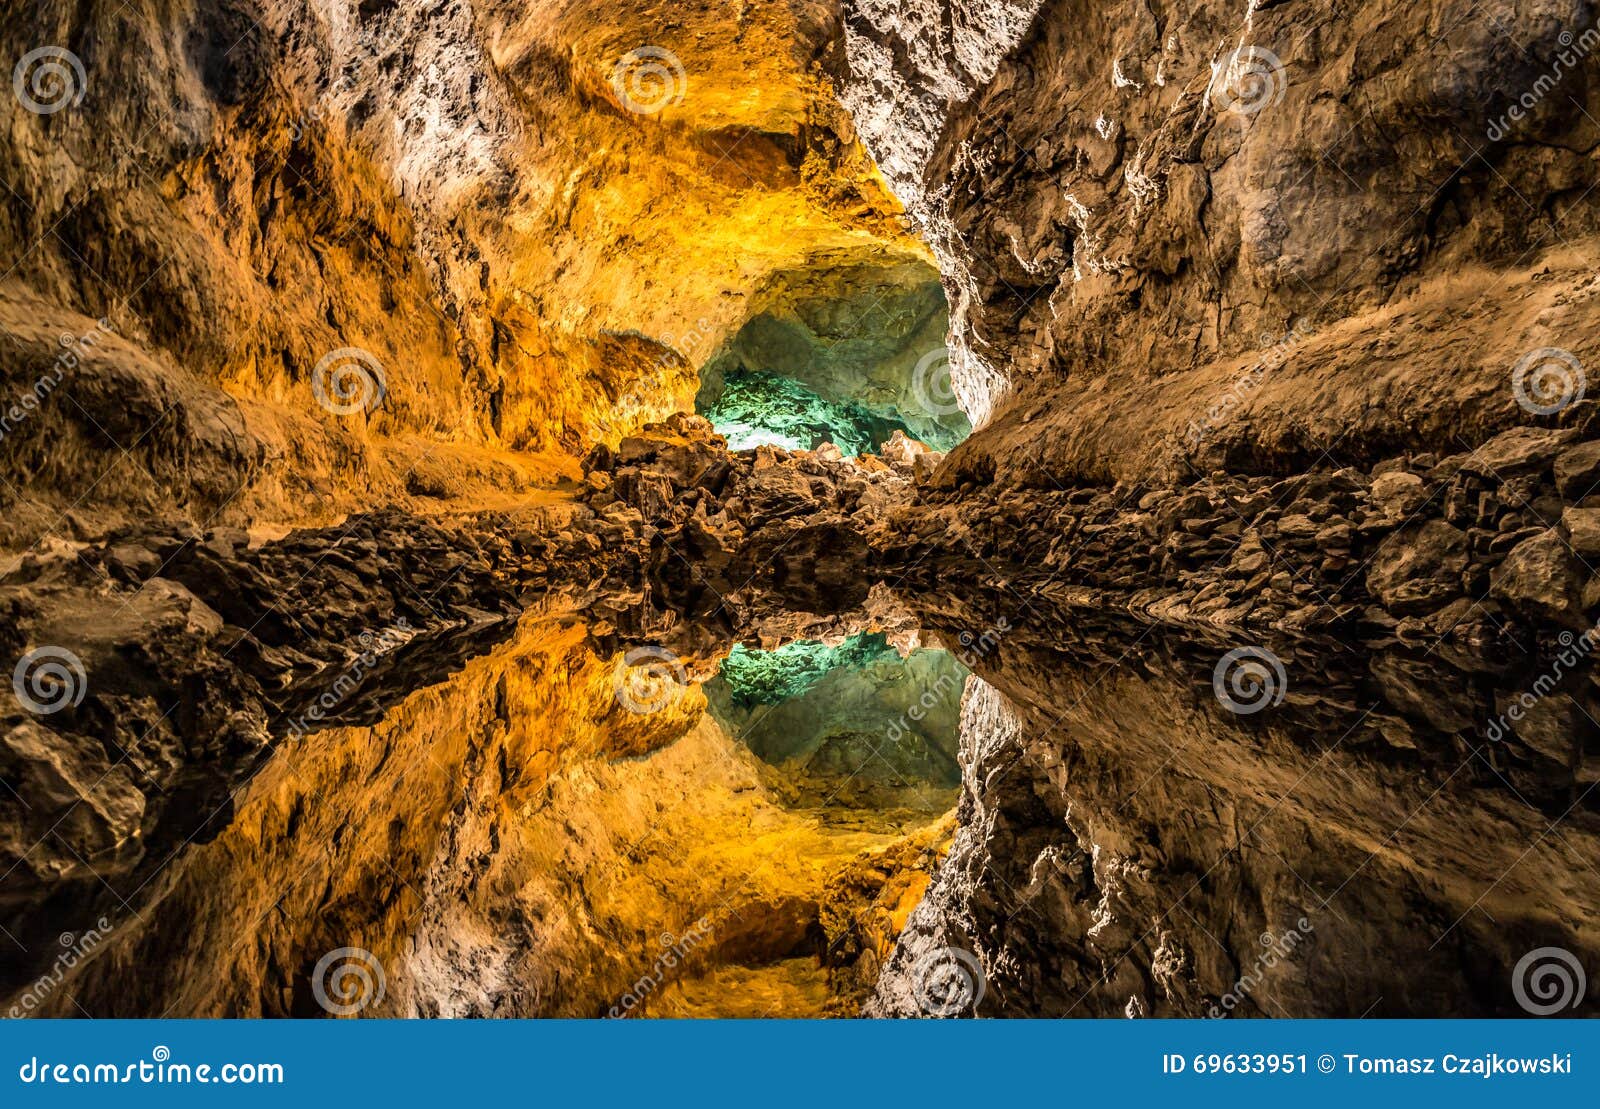 optical illusion in cueva de los verdes, an amazing lava tube and tourist attraction on lanzarote island